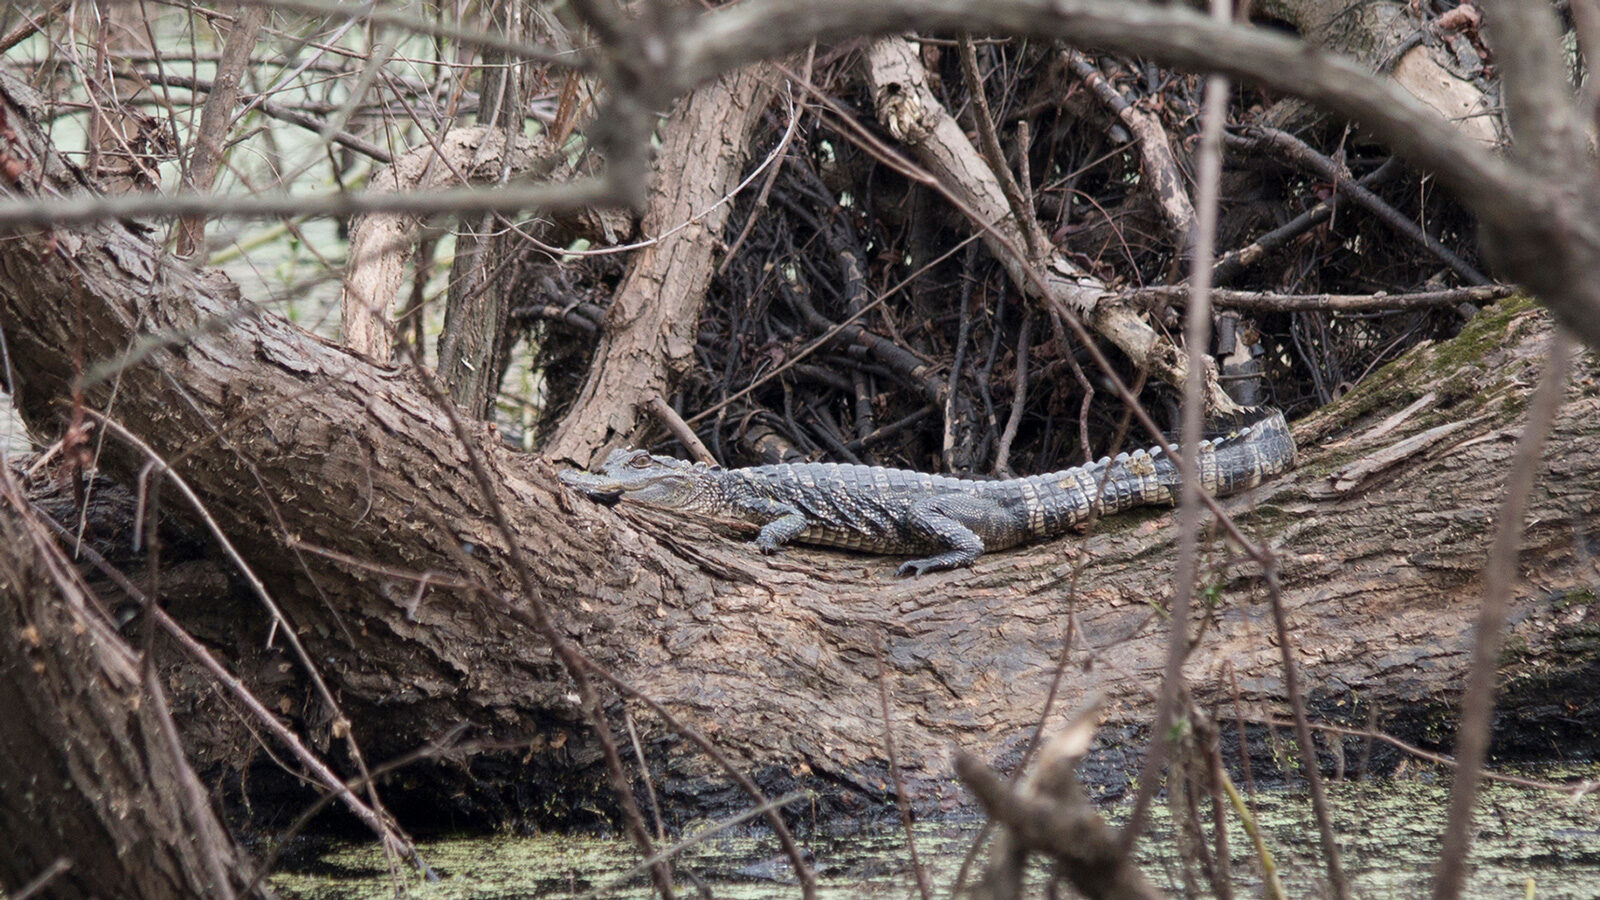 American alligator crawling on log